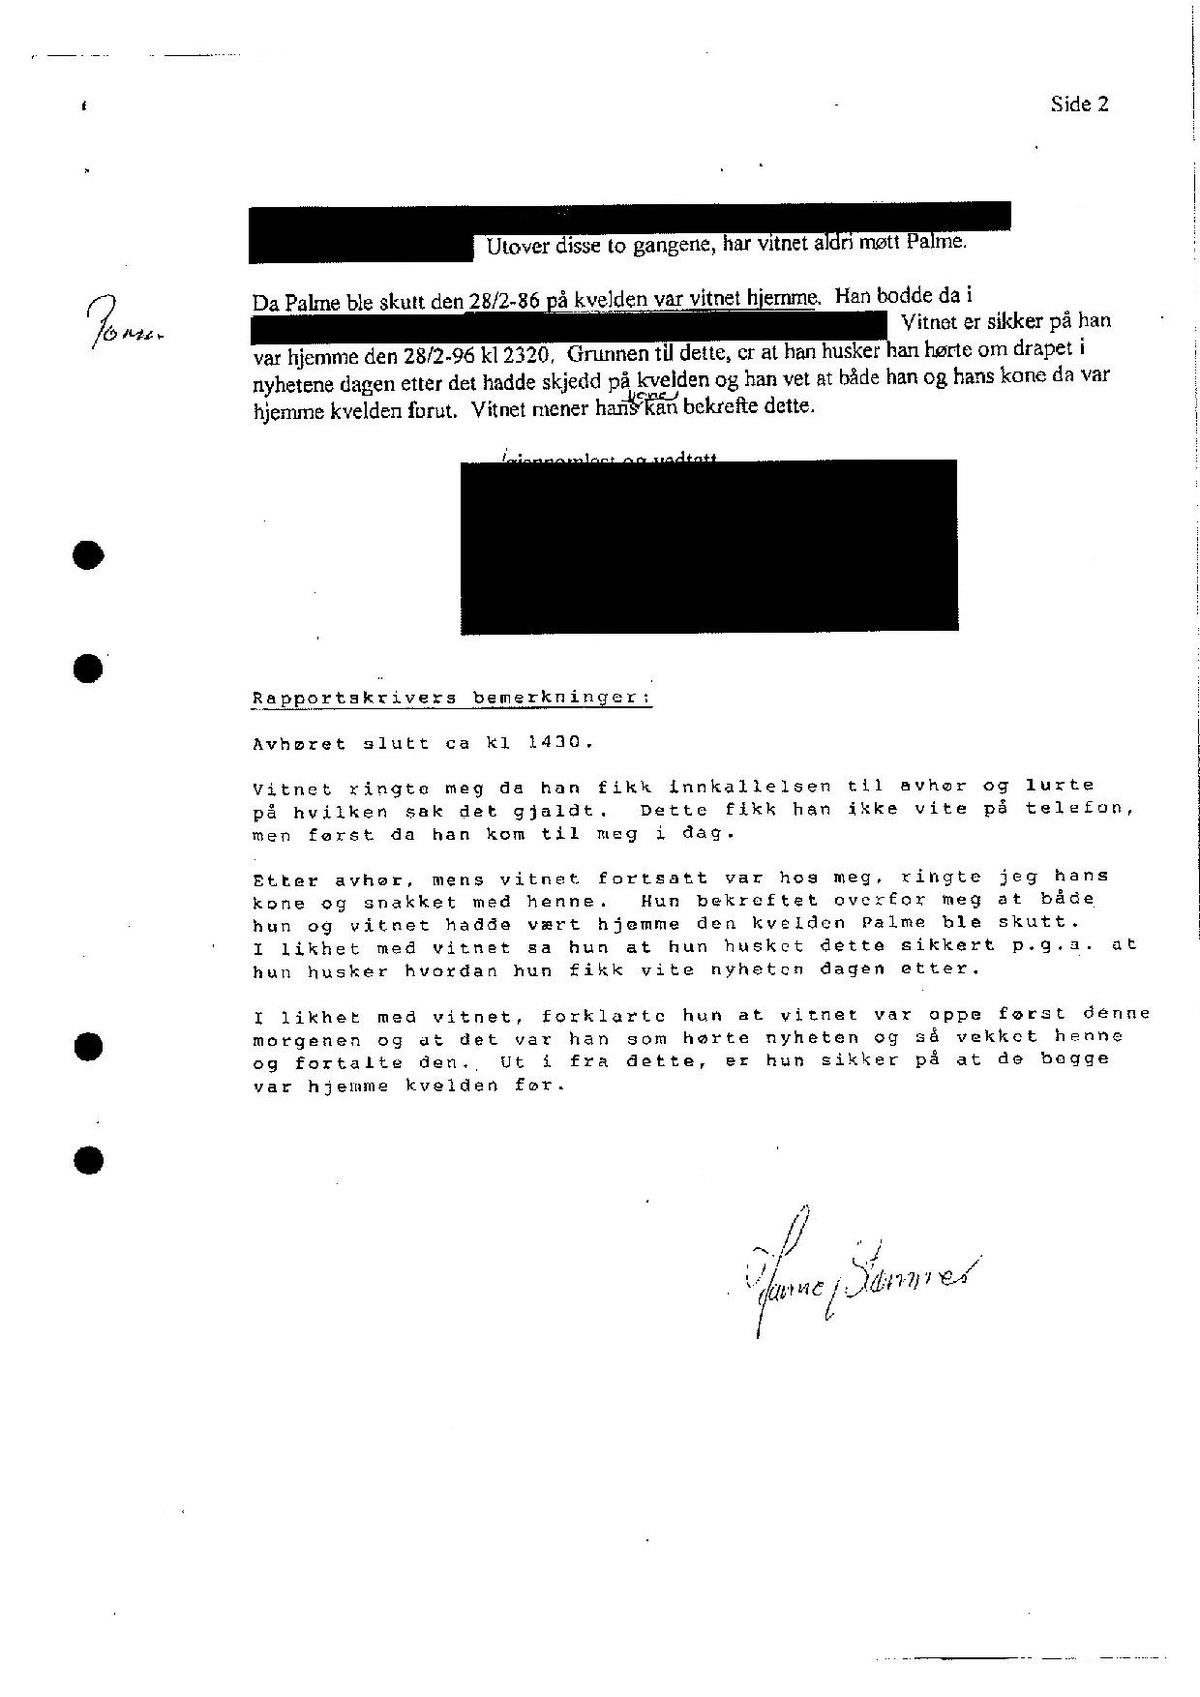 Pol-1996-11-27 V13695-04-A Sala Telefax förhör utvisad jugoslav hotar mörda Palme.pdf